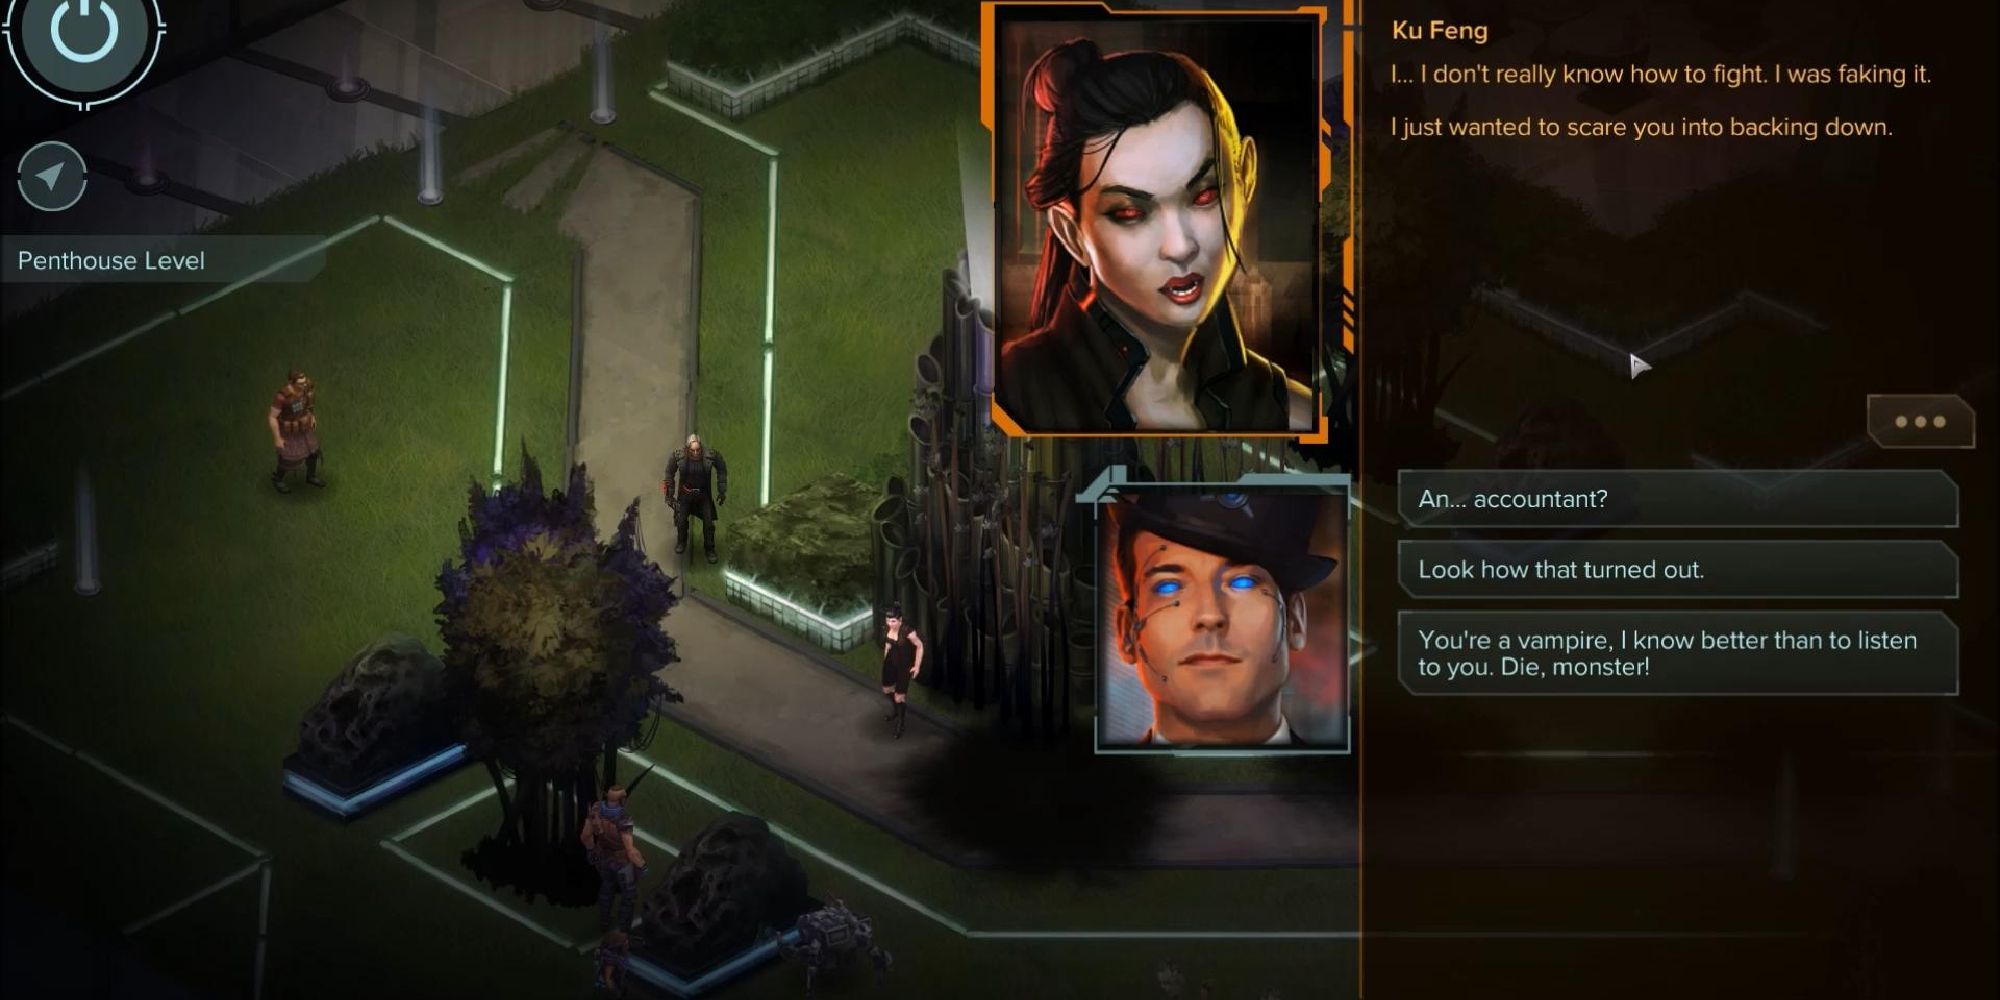 A screenshot from Shadowrun Hong Kong, showing Ku Feng admitting that she's not really a fighter